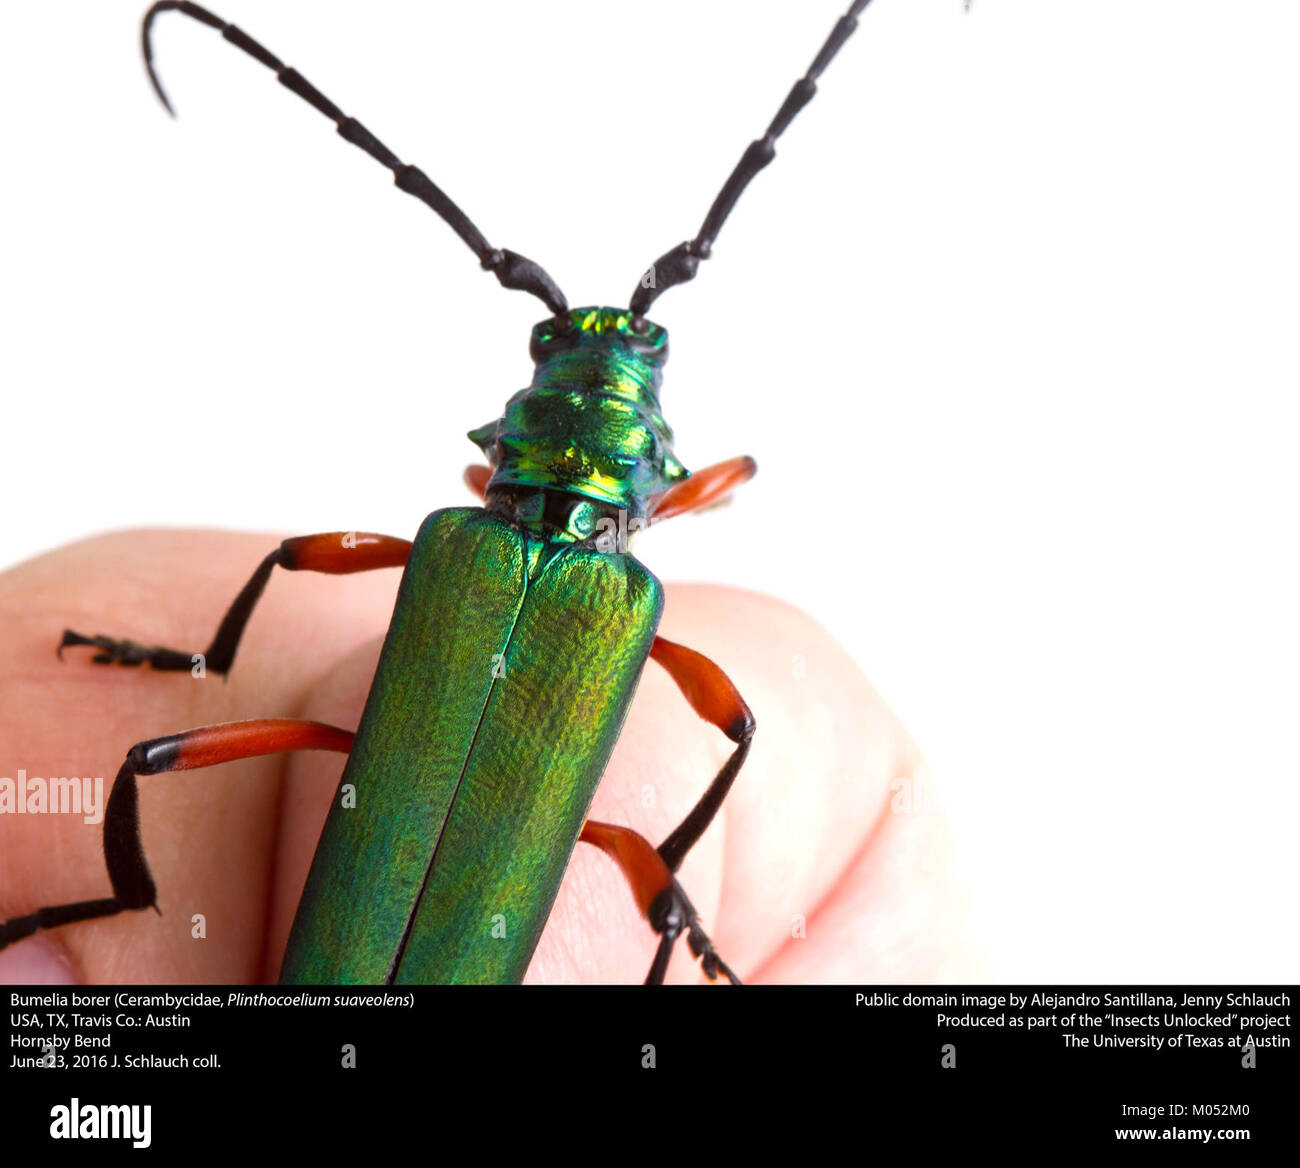 Bumelia Borer (Cerambycidae, Plinthocoelum suaveolens) (27451364193) Stock Photo